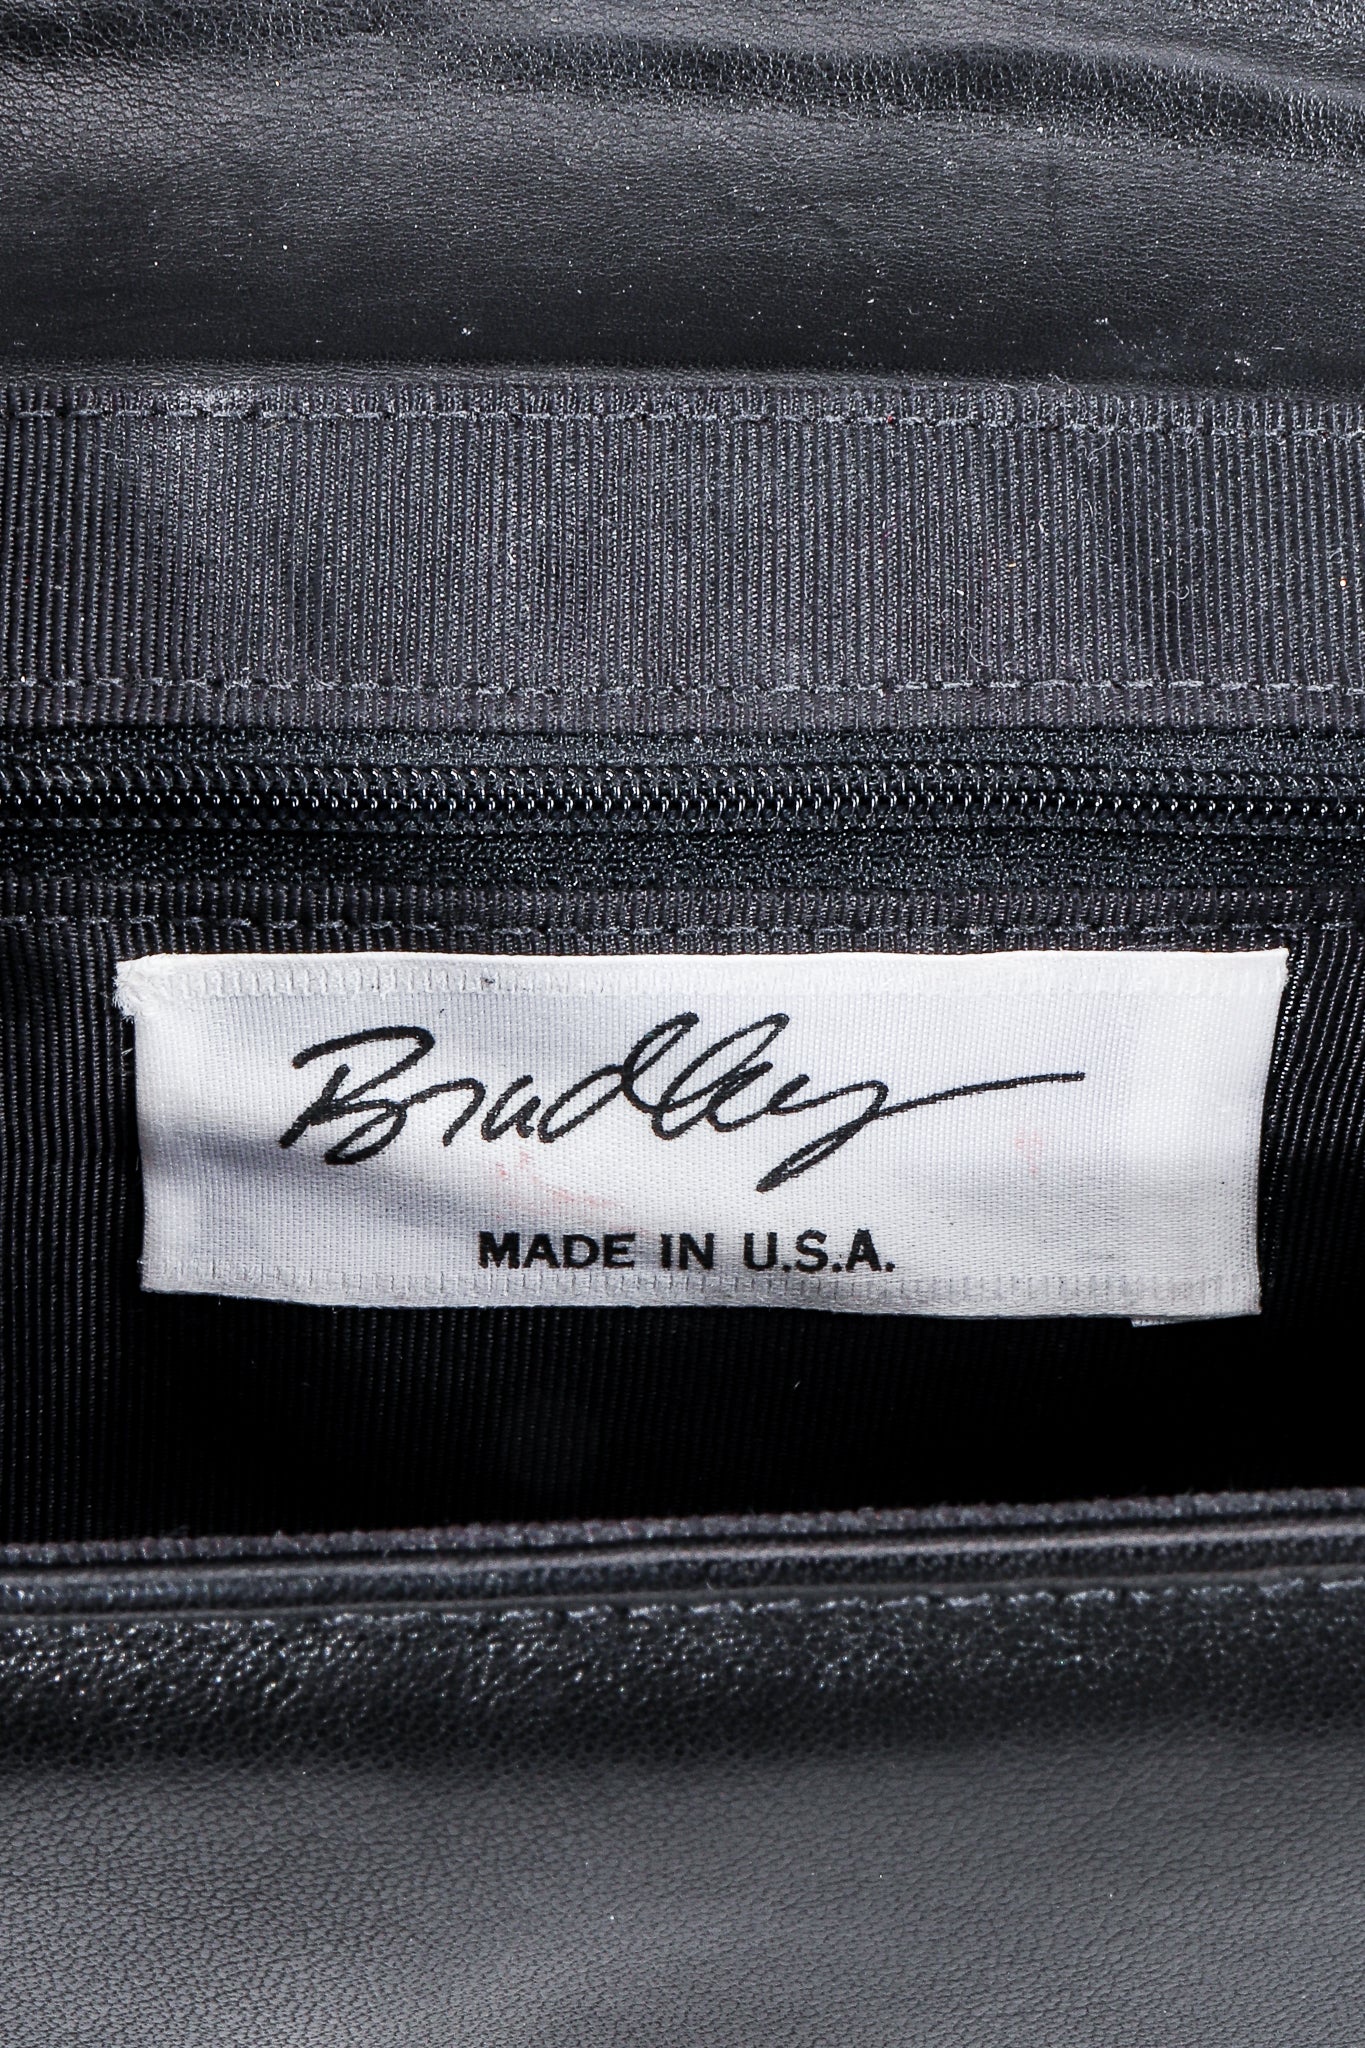 Vintage Bradley Label on interior